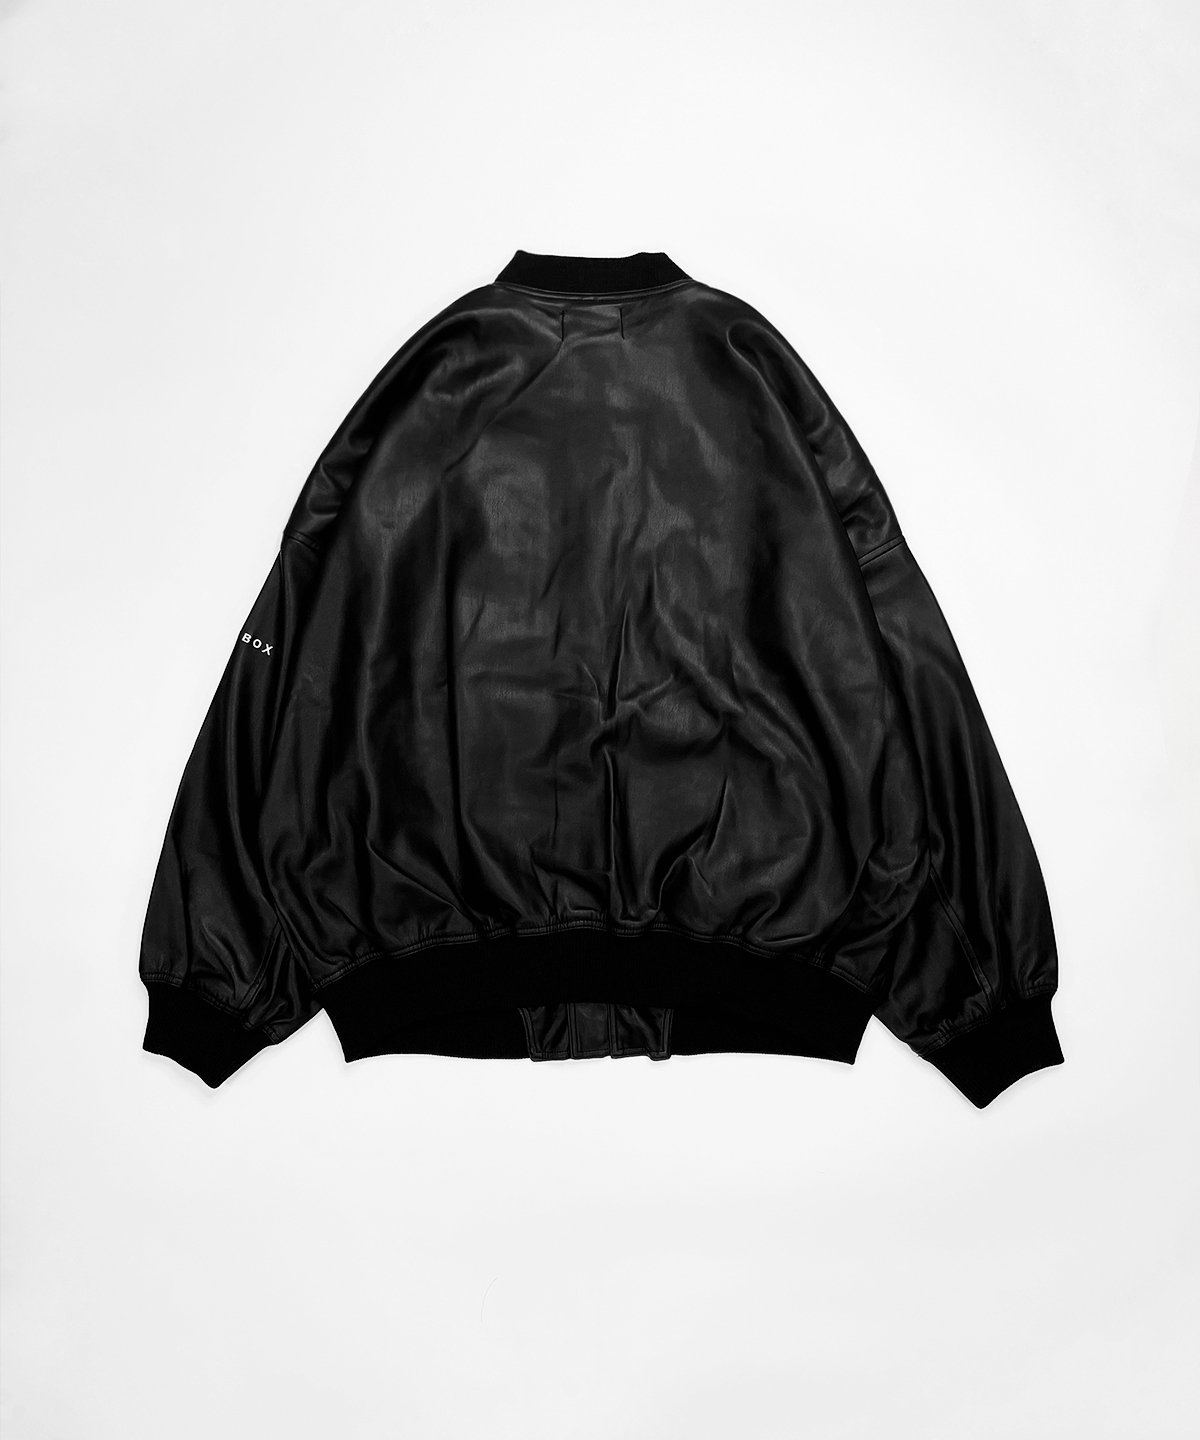 山猿 BLACK×BOX BLACK×BOX Leather Embroidery OverSize MA-1